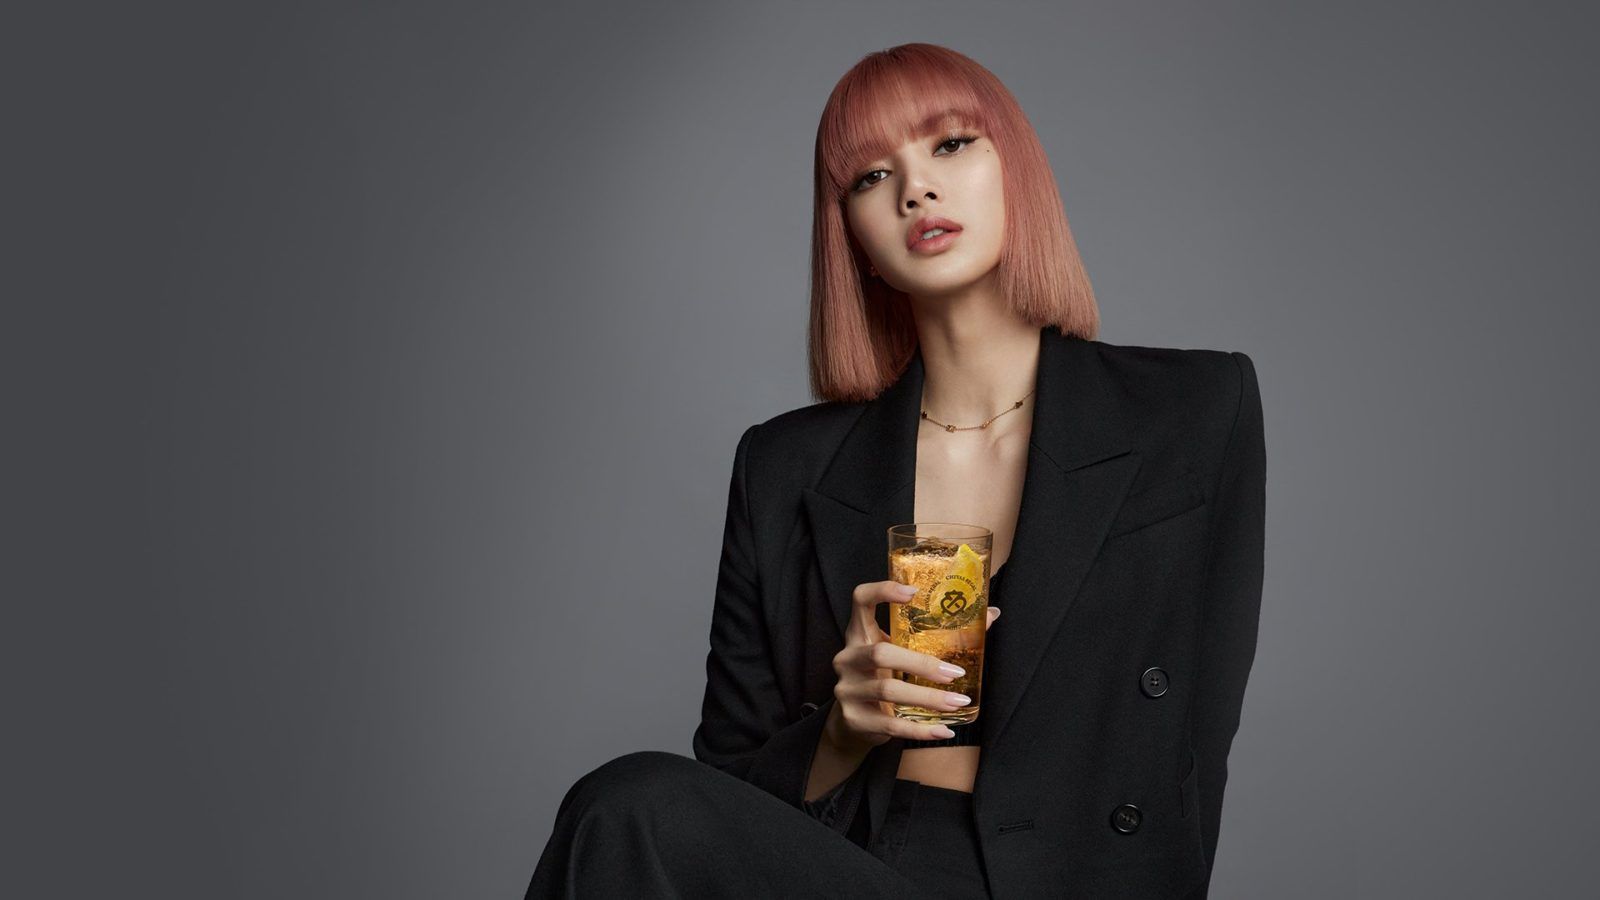 Blackpink's Lisa is the new Chivas Regal Asia Brand Ambassador